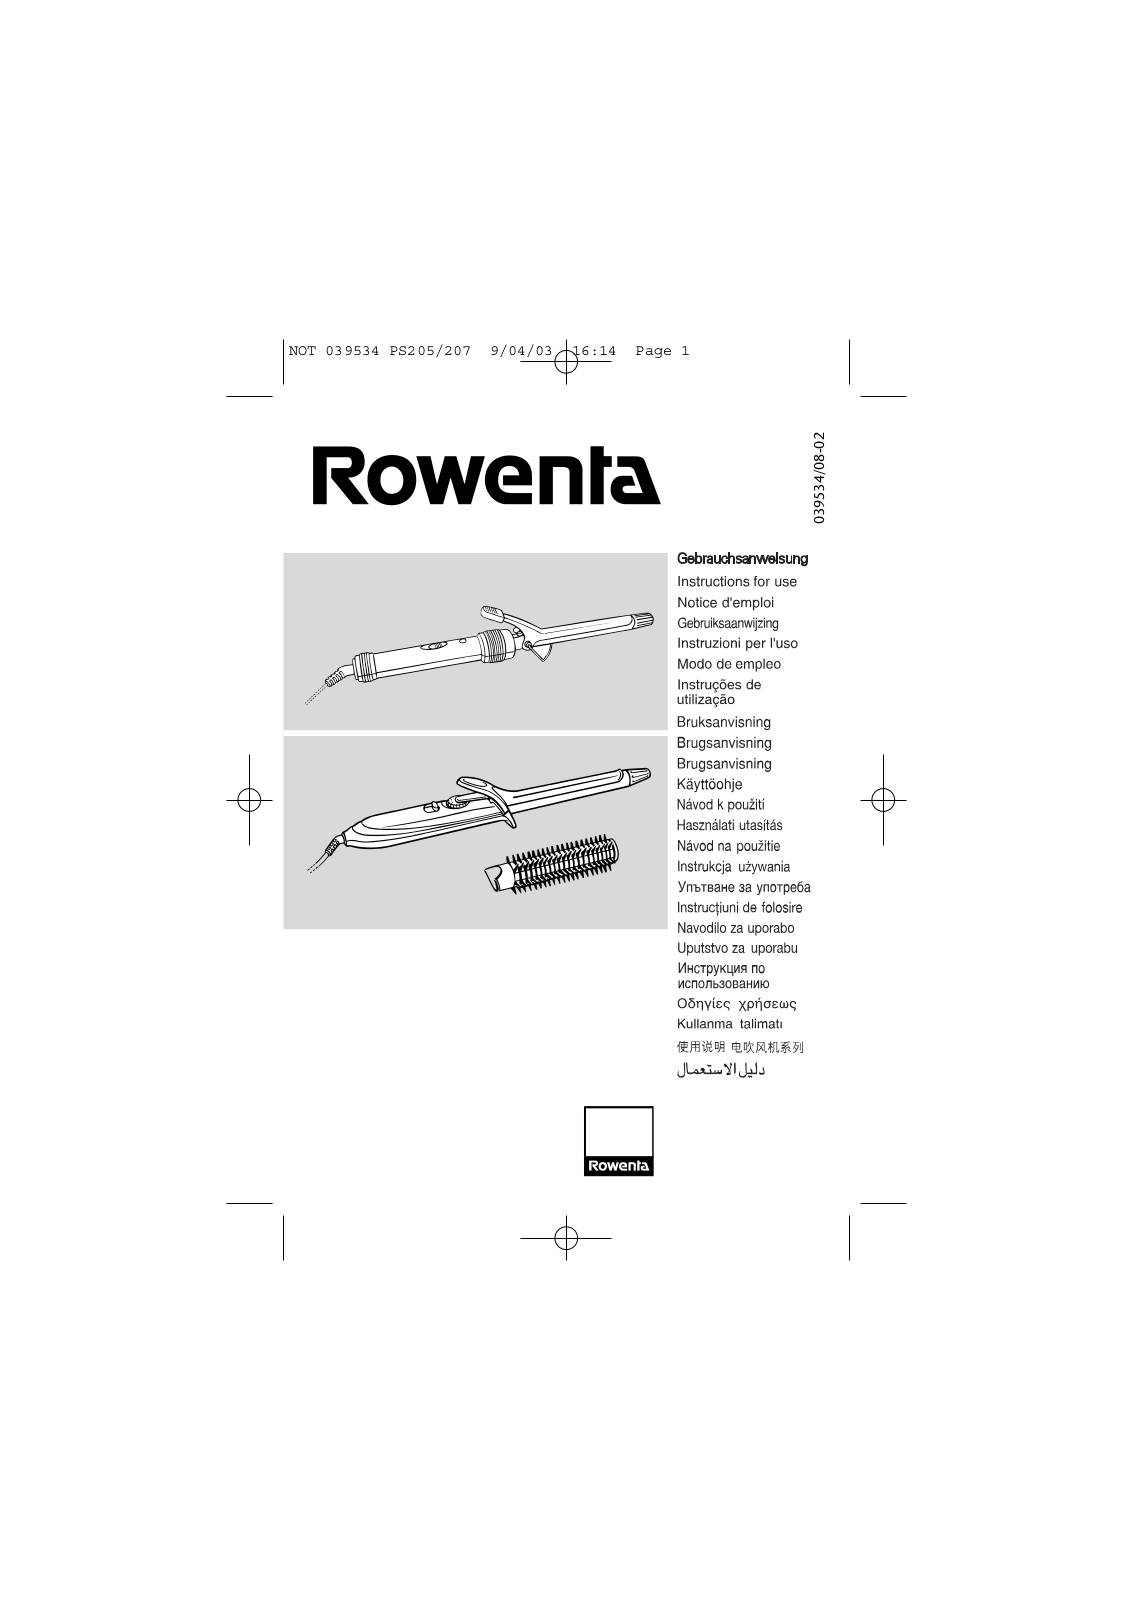 Rowenta PS 207, PS 205 Manual